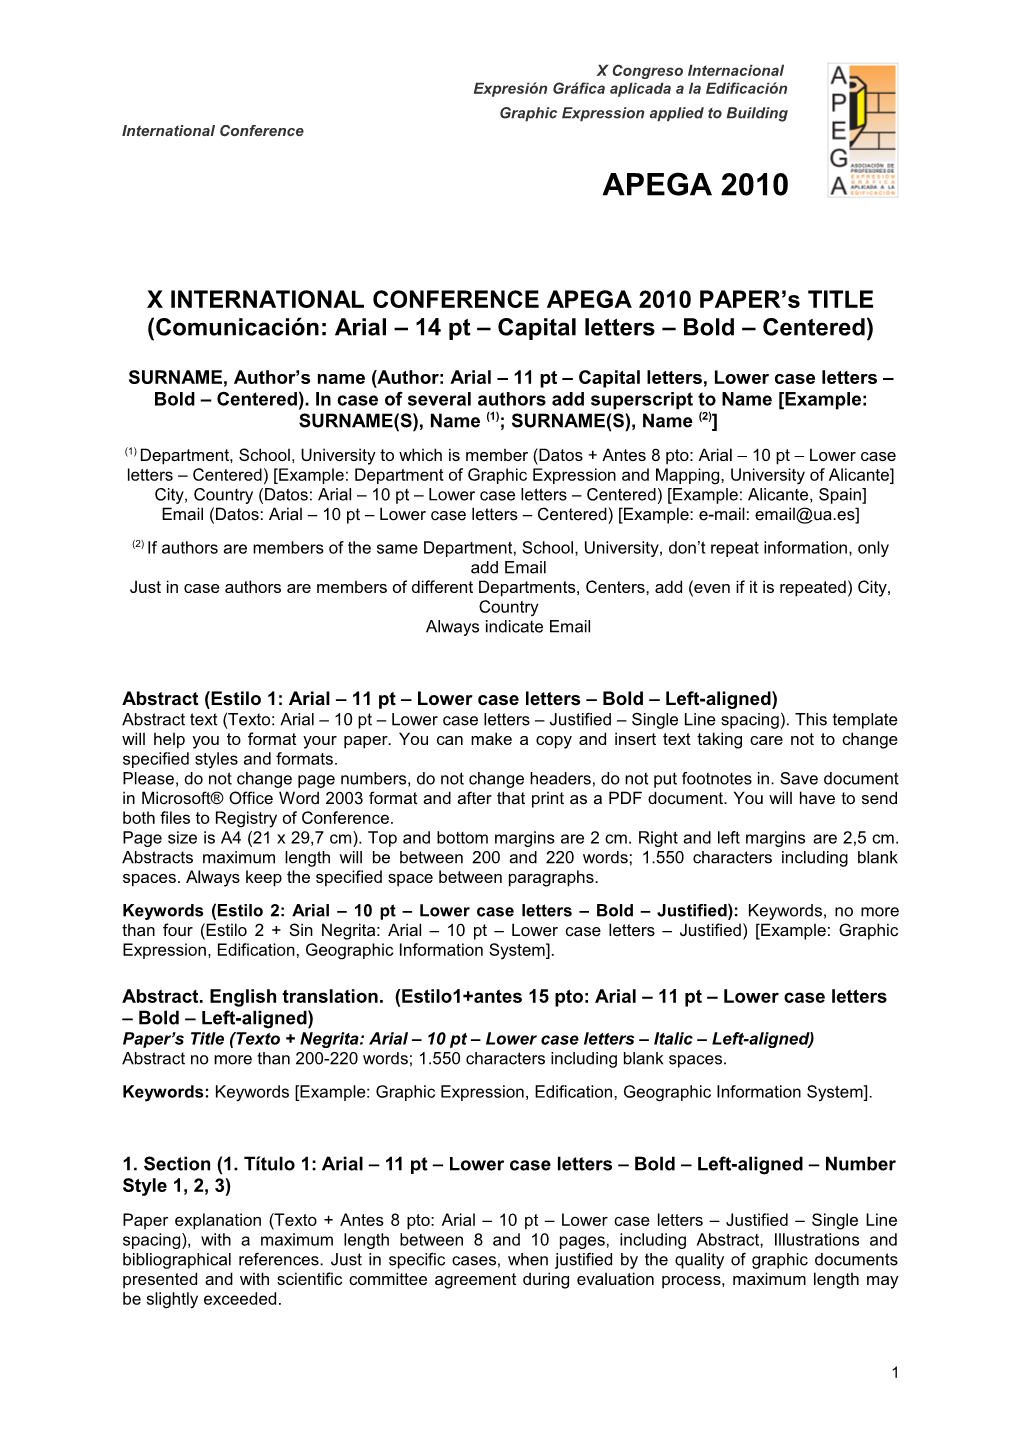 X INTERNATIONAL CONFERENCE APEGA 2010 PAPER S TITLE (Comunicación: Arial 14 Pt Capital